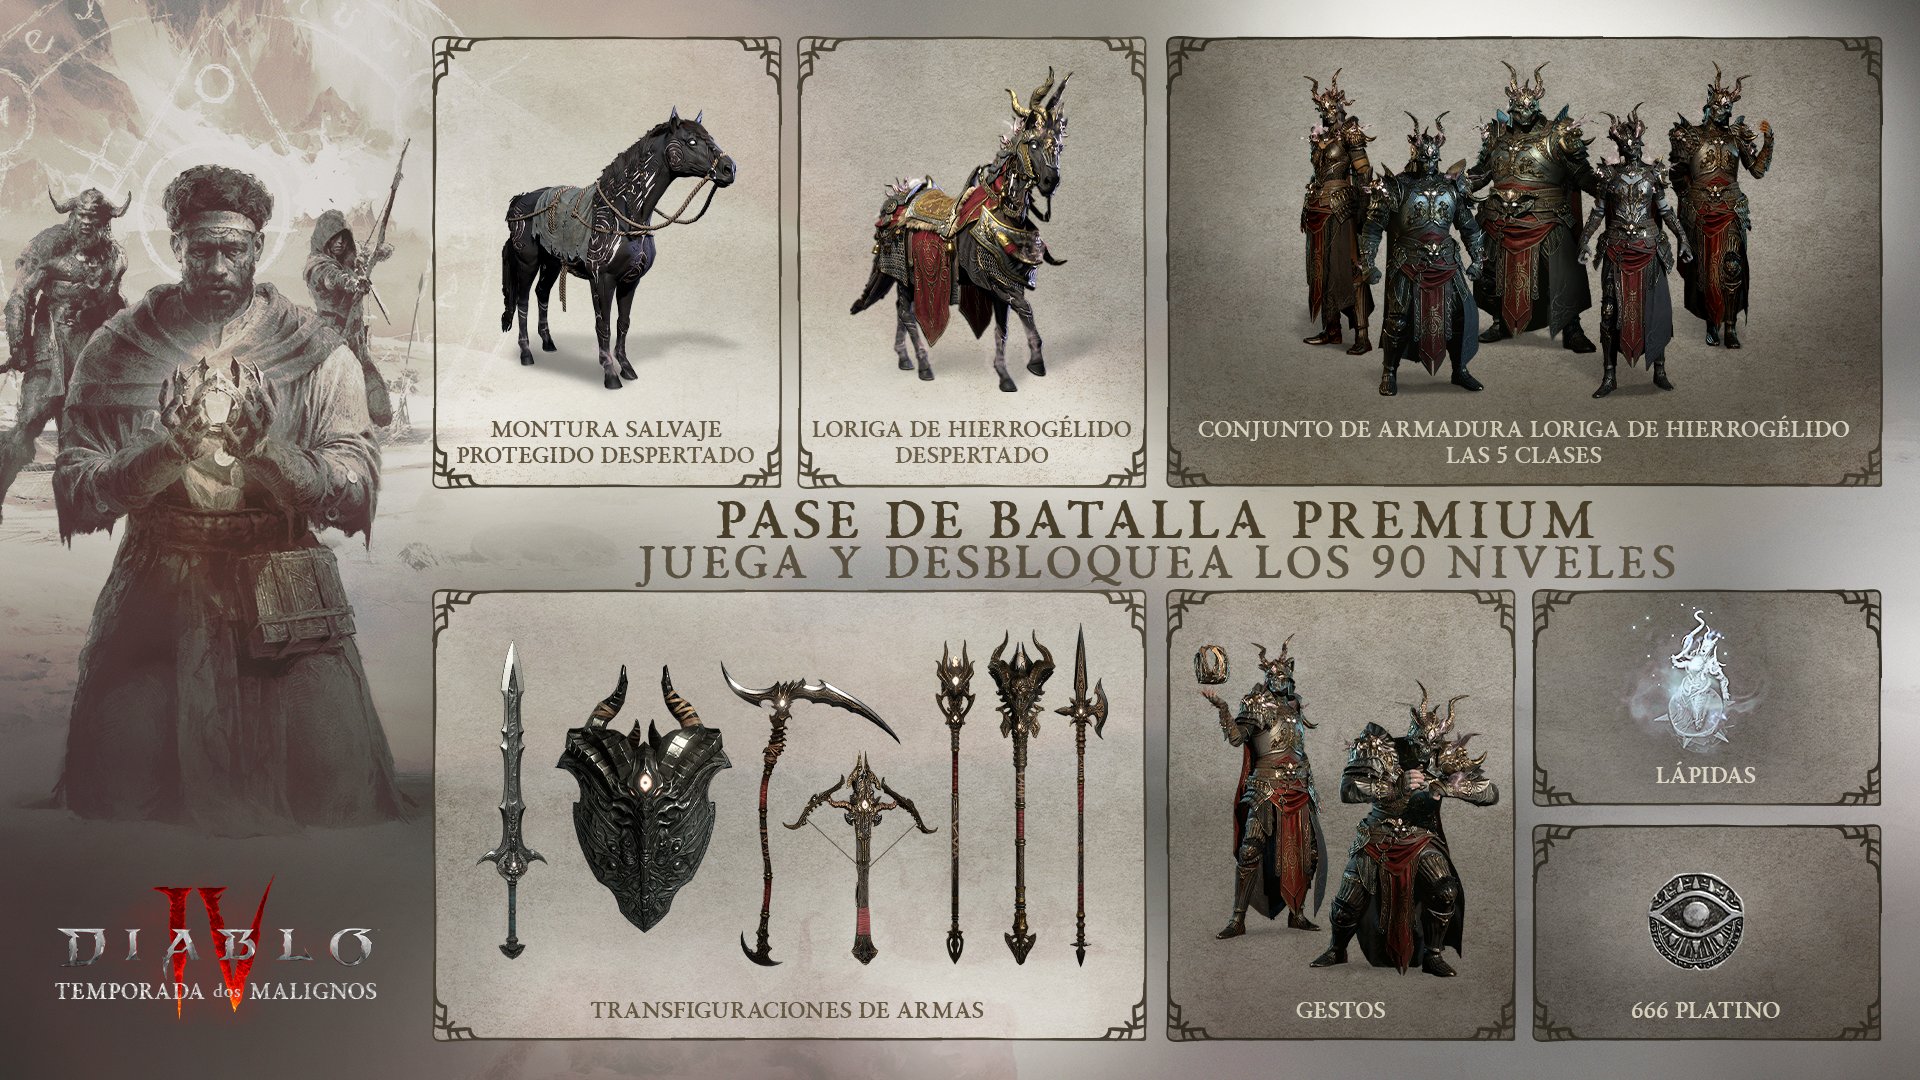 Diablo IV: Season of the Malignant